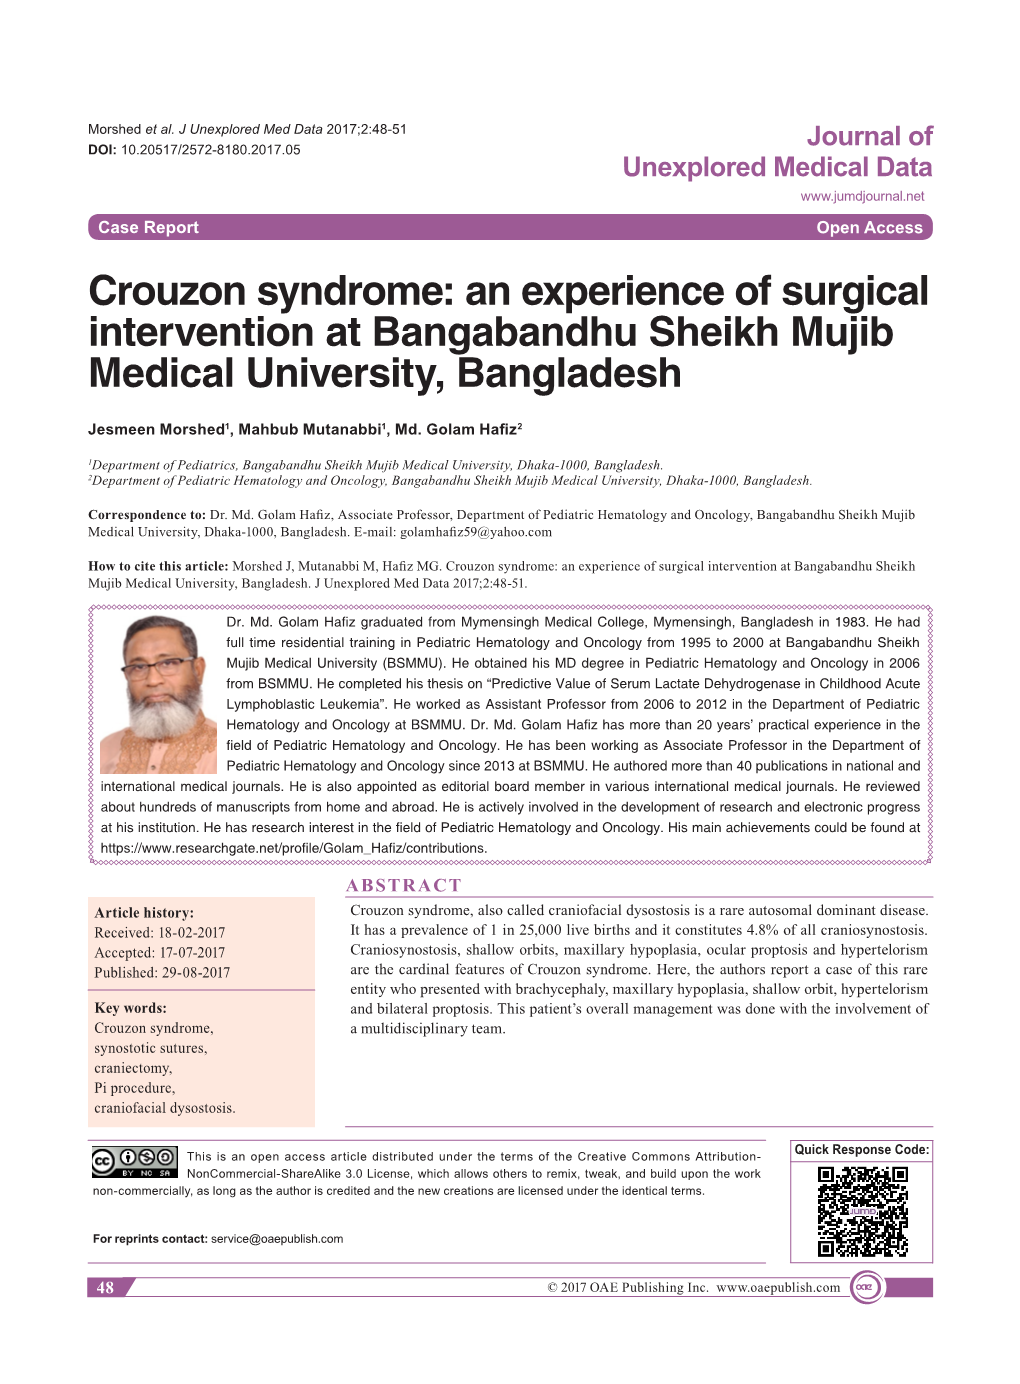 Crouzon Syndrome: an Experience of Surgical Intervention at Bangabandhu Sheikh Mujib Medical University, Bangladesh